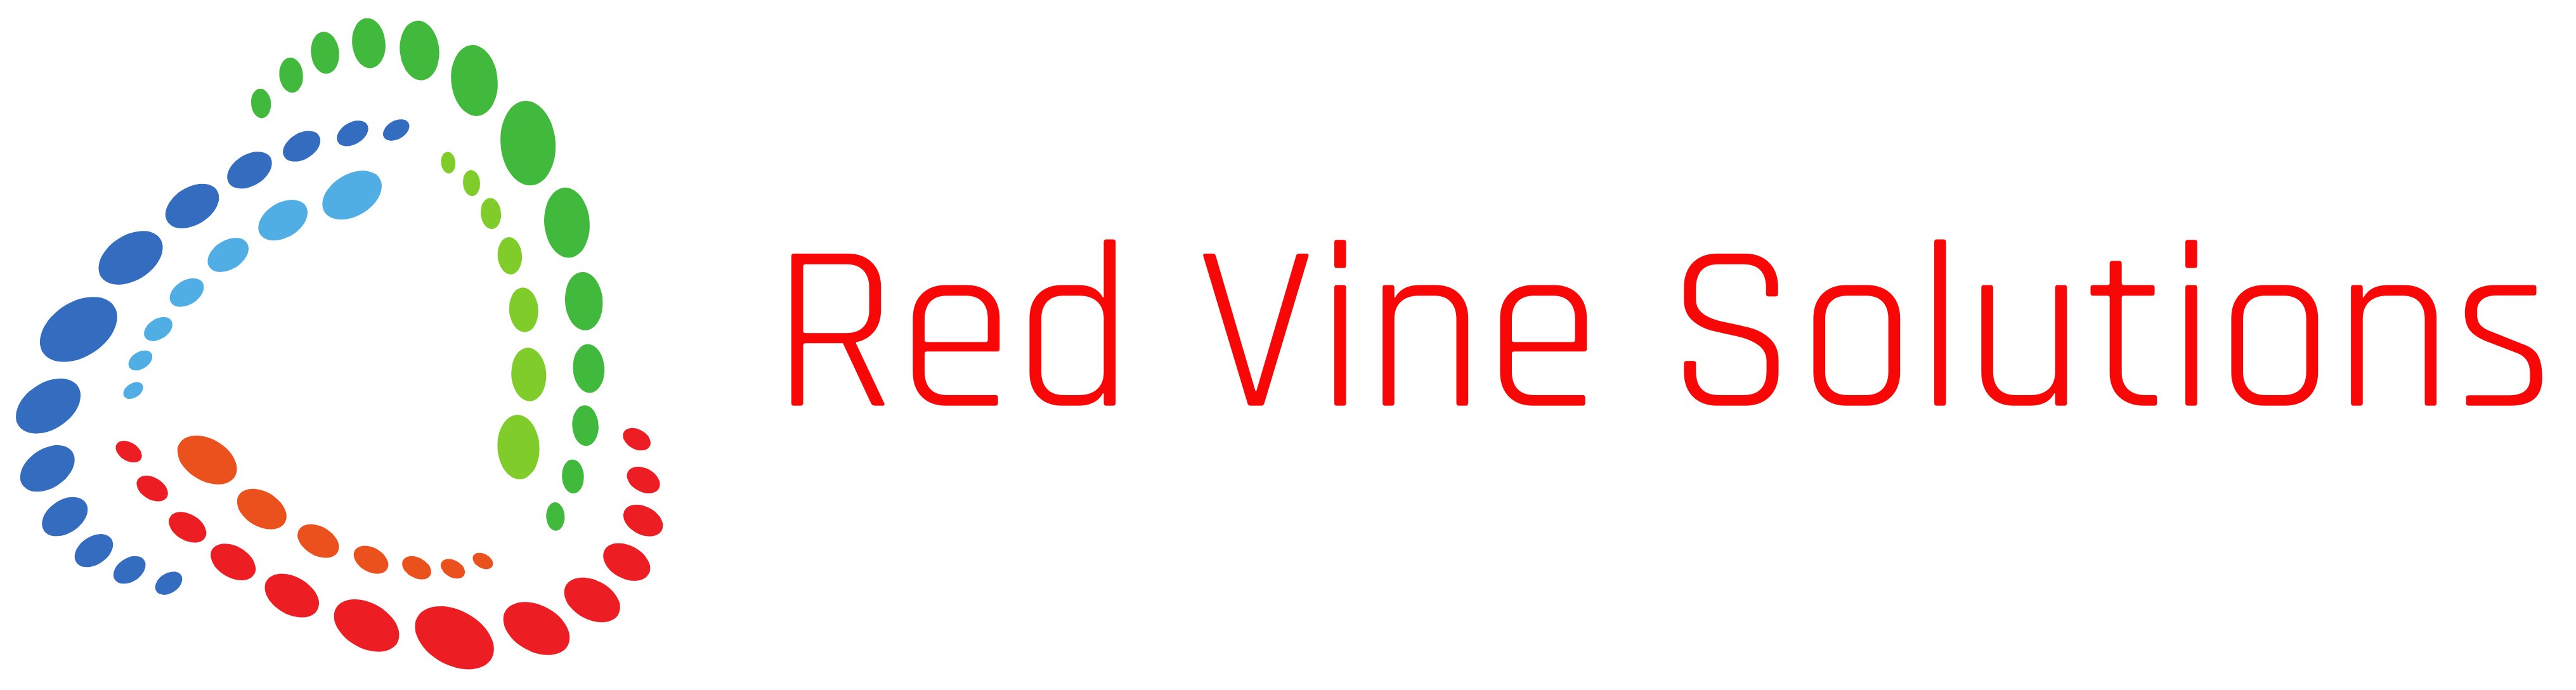 Red Vine Solutions Ltd